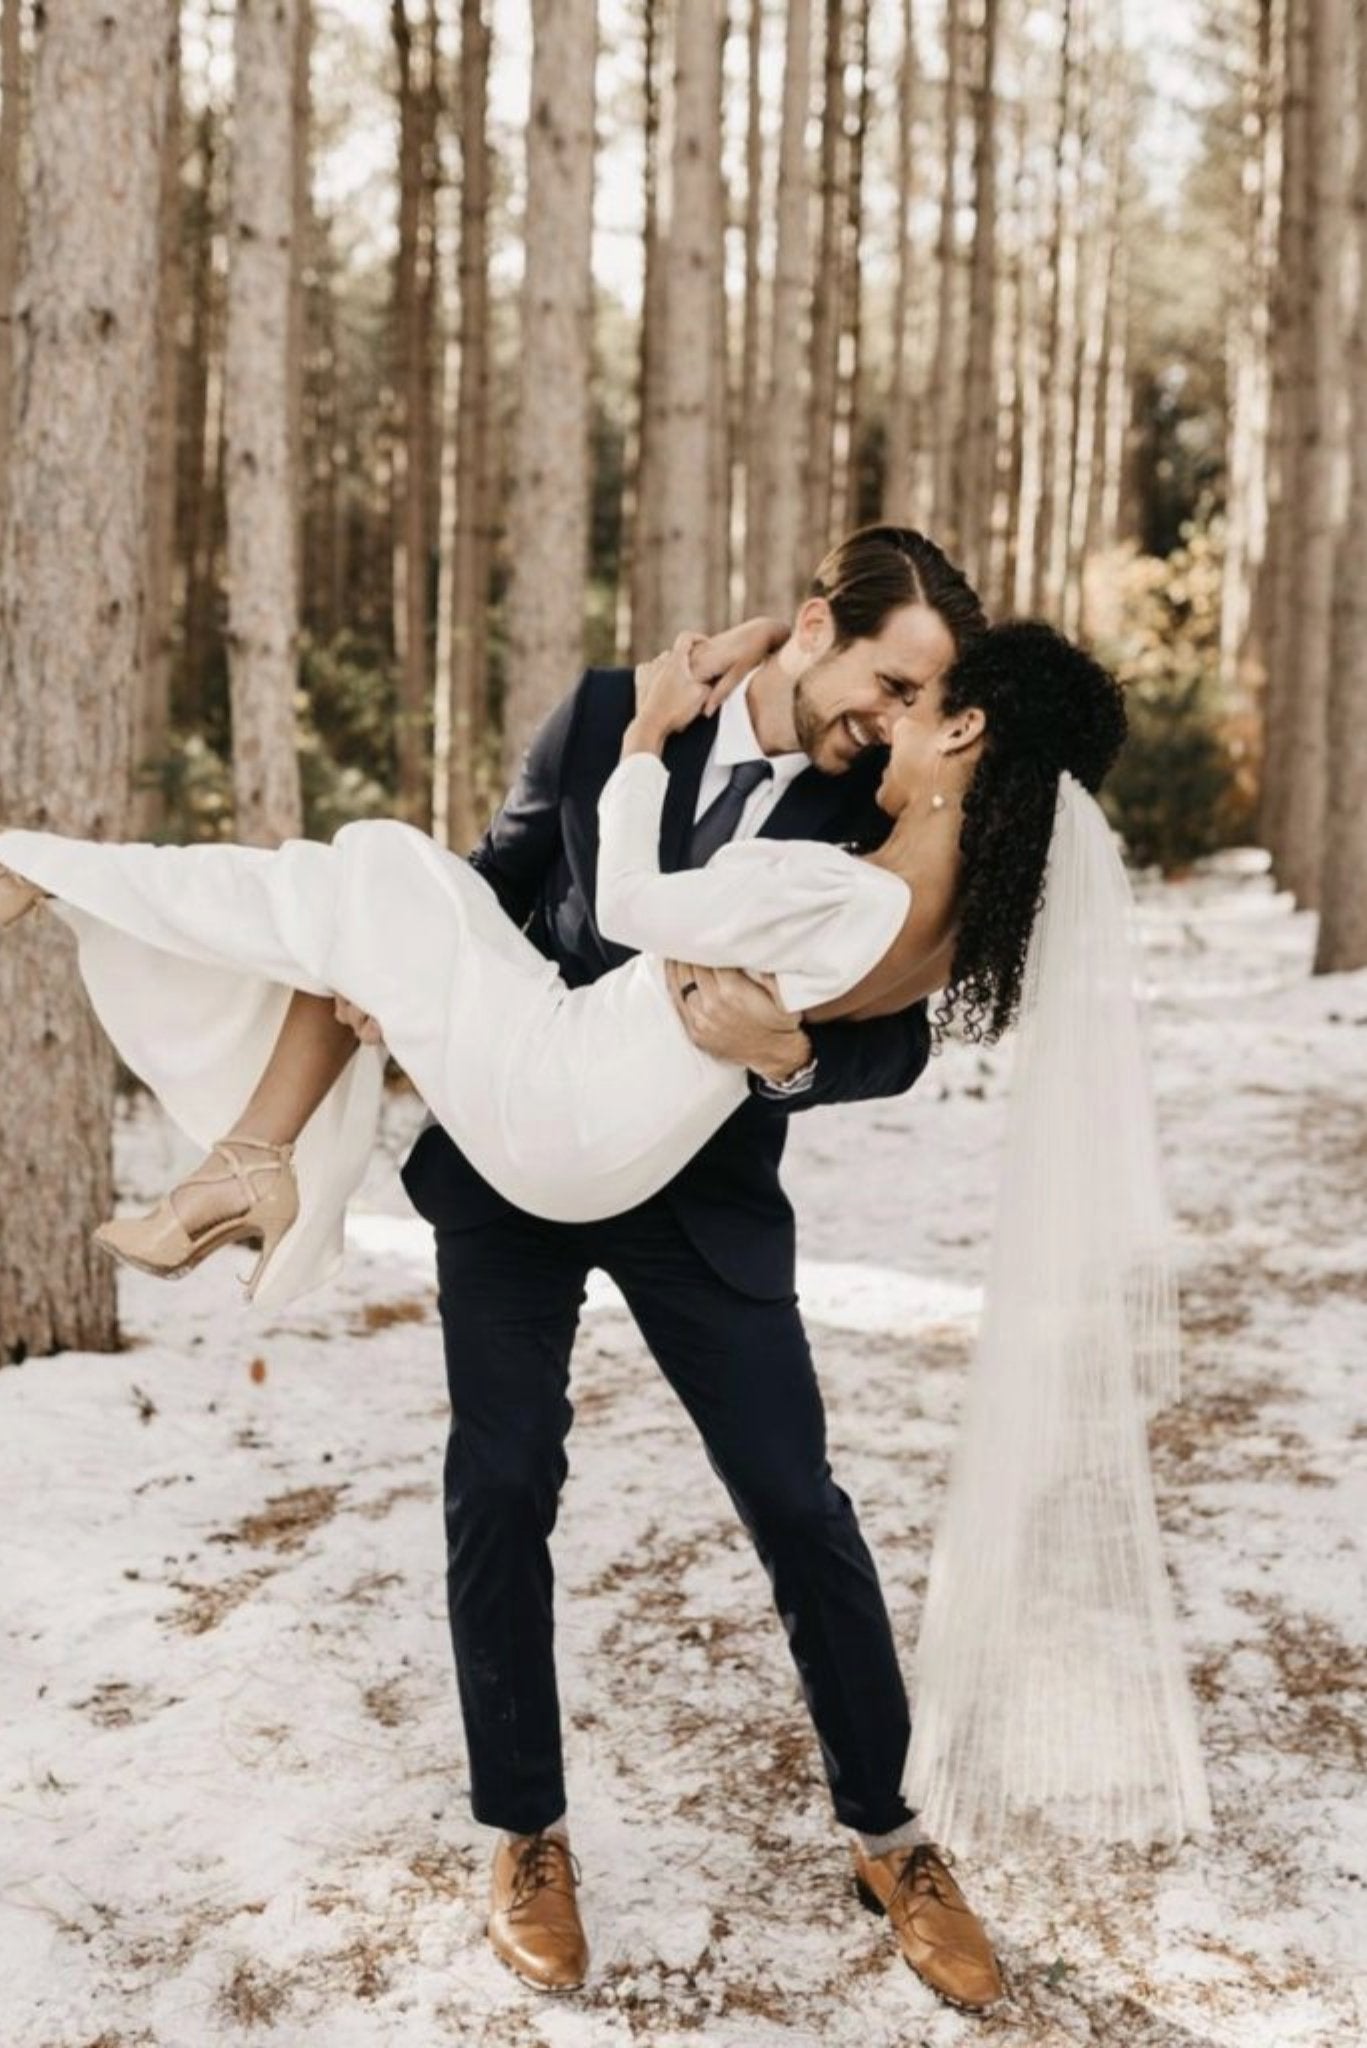 Winter Wedding Decor & Photo Ideas - Pretty Collected